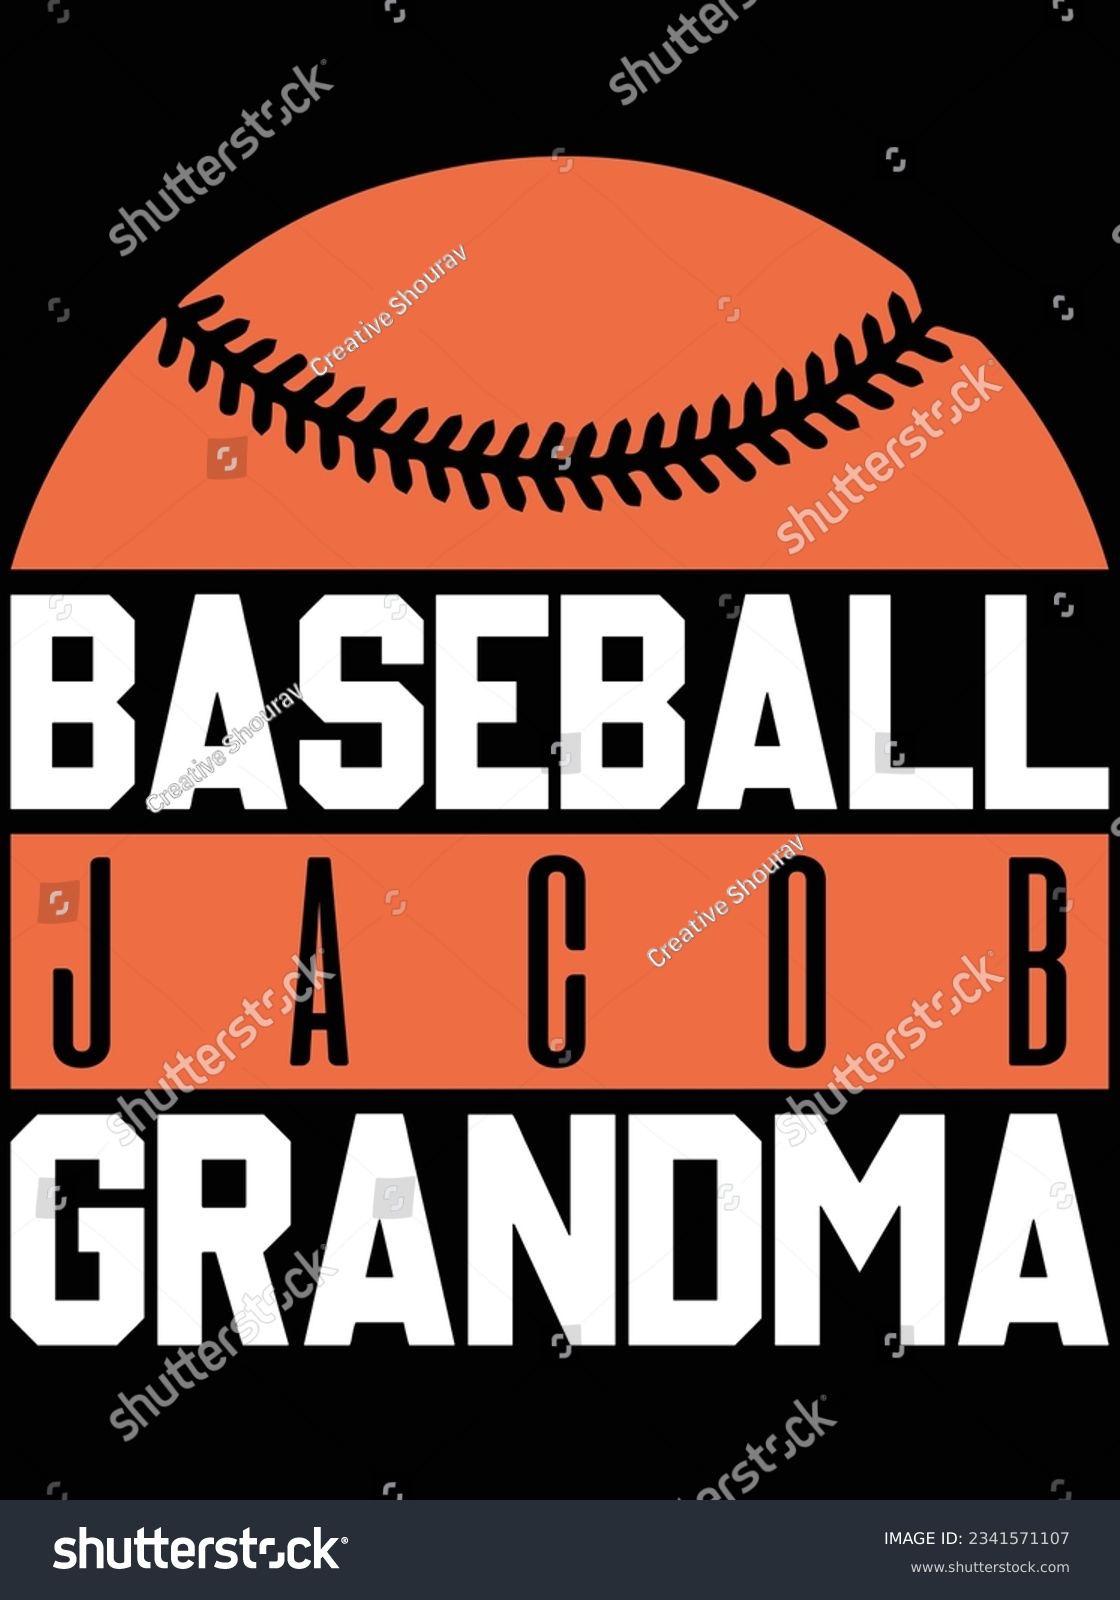 SVG of Baseball Jacob grandma vector art design, eps file. design file for t-shirt. SVG, EPS cuttable design file svg